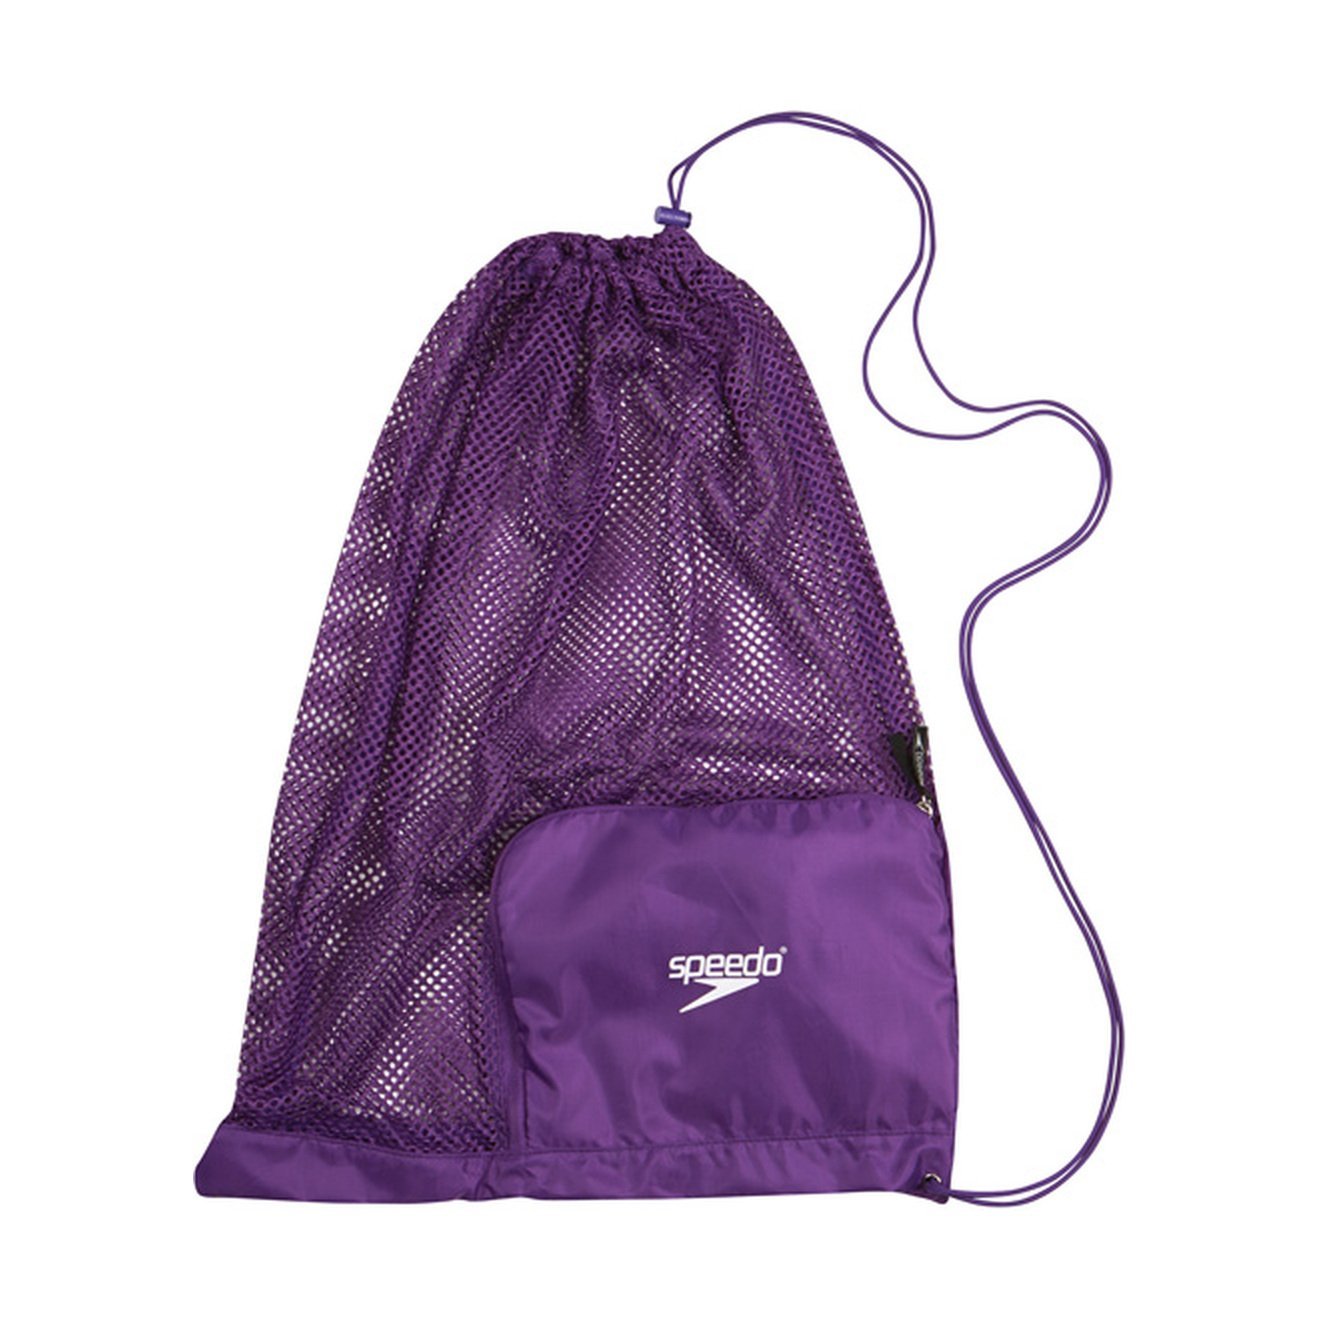 SPEEDO Backpack style Diving Gear Bag Price in India - Buy SPEEDO Backpack  style Diving Gear Bag online at Flipkart.com